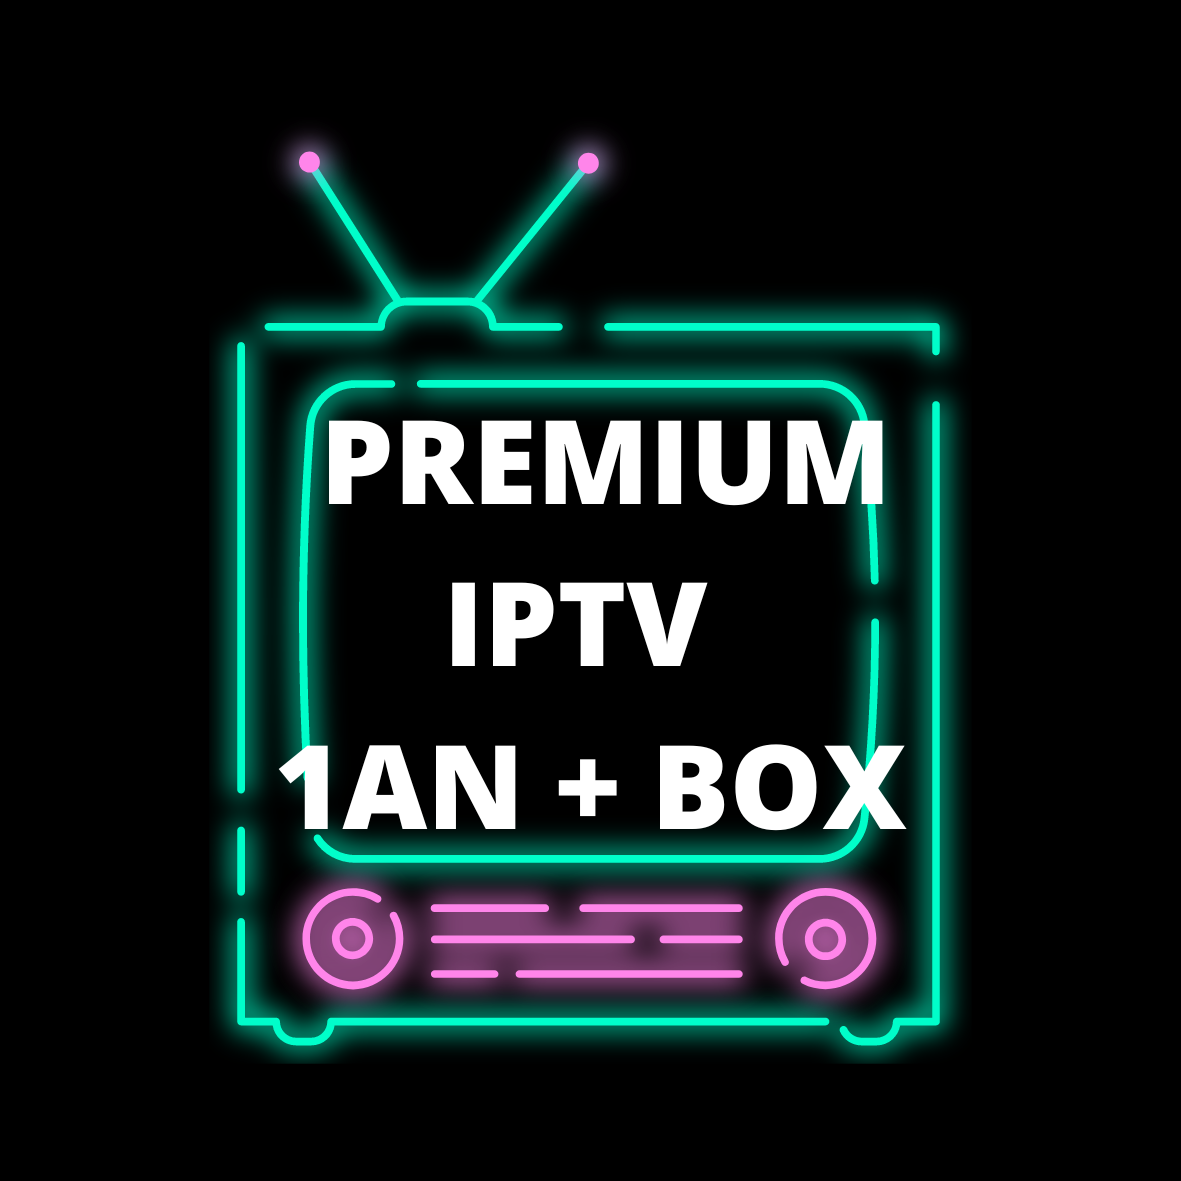 PREMIUM IPTV SUISSE 1 AN + BOX ANDROIDE INCLUSE